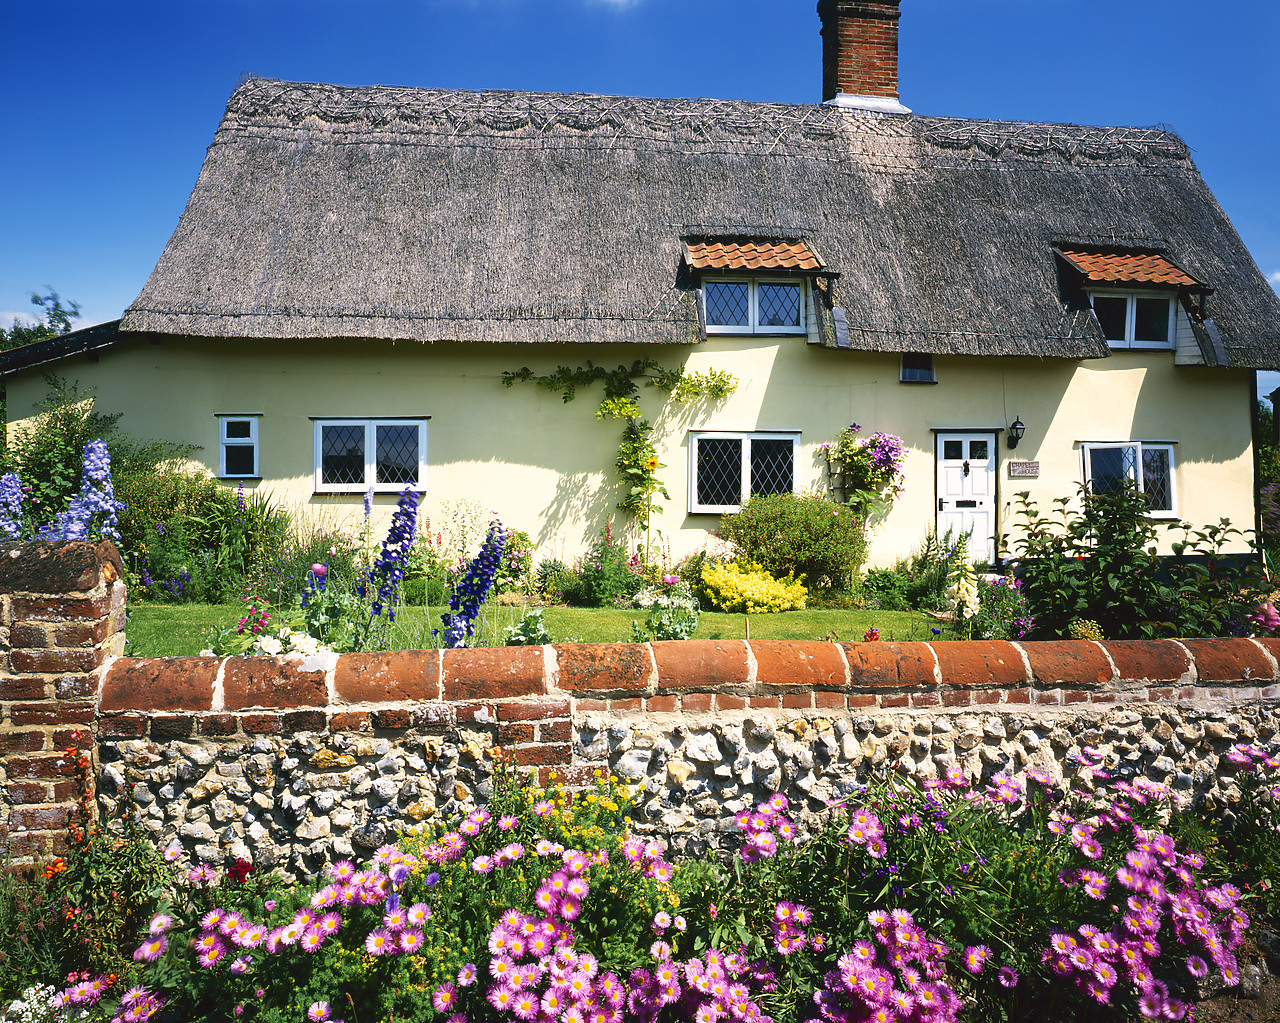 #030133-2 - Thatched Cottage & Garden, Redgrave, Suffolk, England